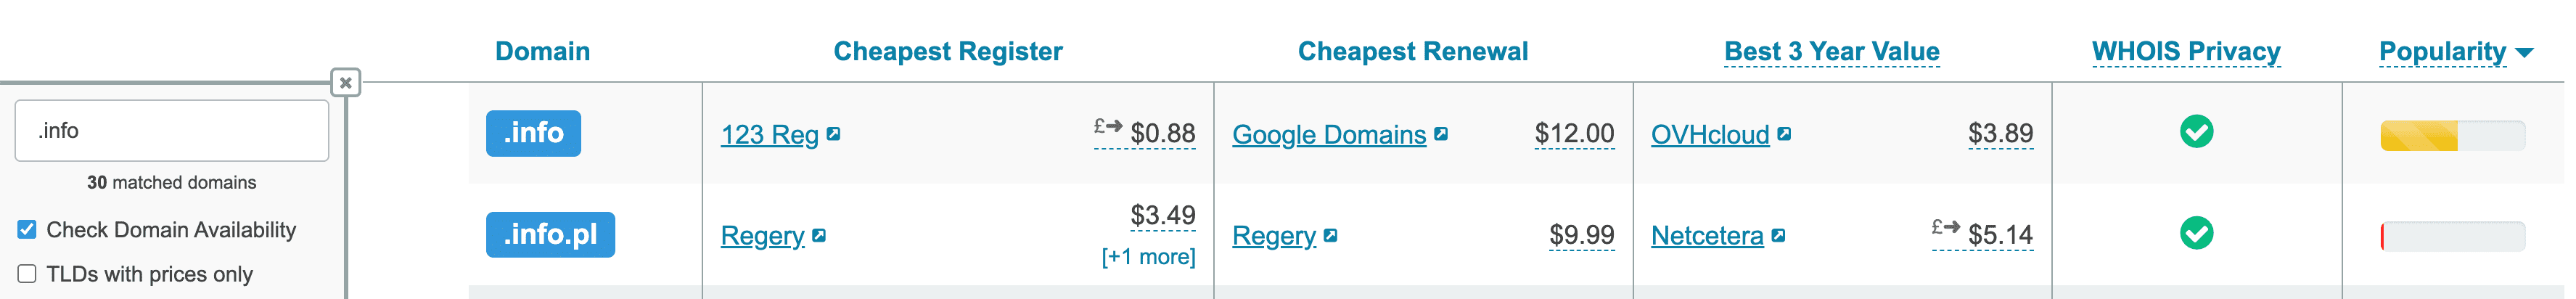 info domain price